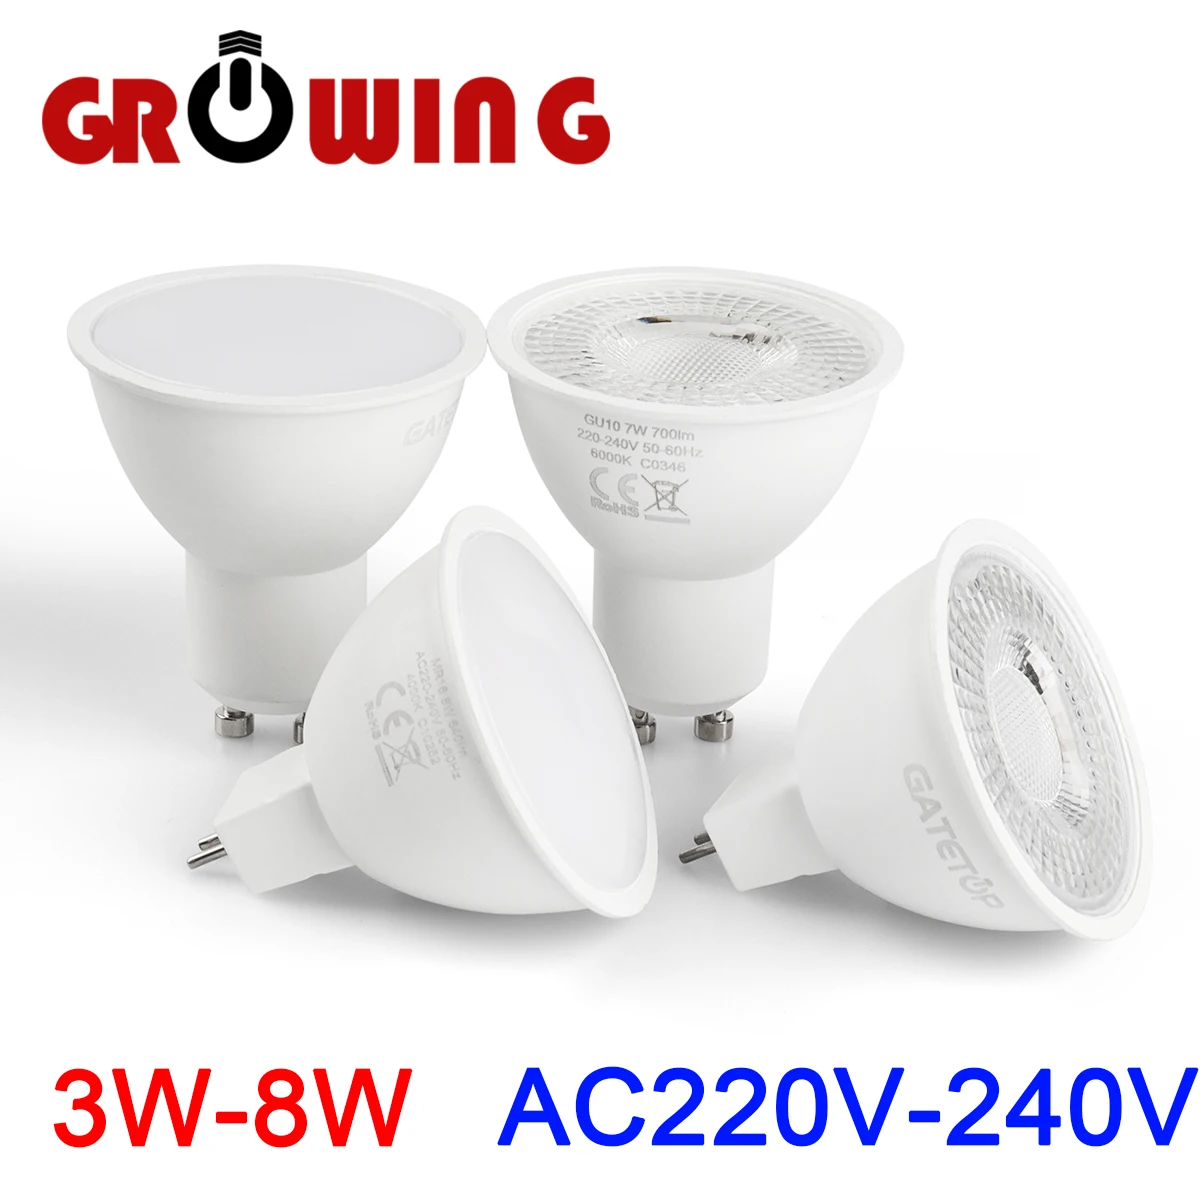 

LED spotlight GU10 GU5.3 AC220V high luminous efficiency, no flicker, warm white light 3W-8W, can replace 20W 50W halogen lamp